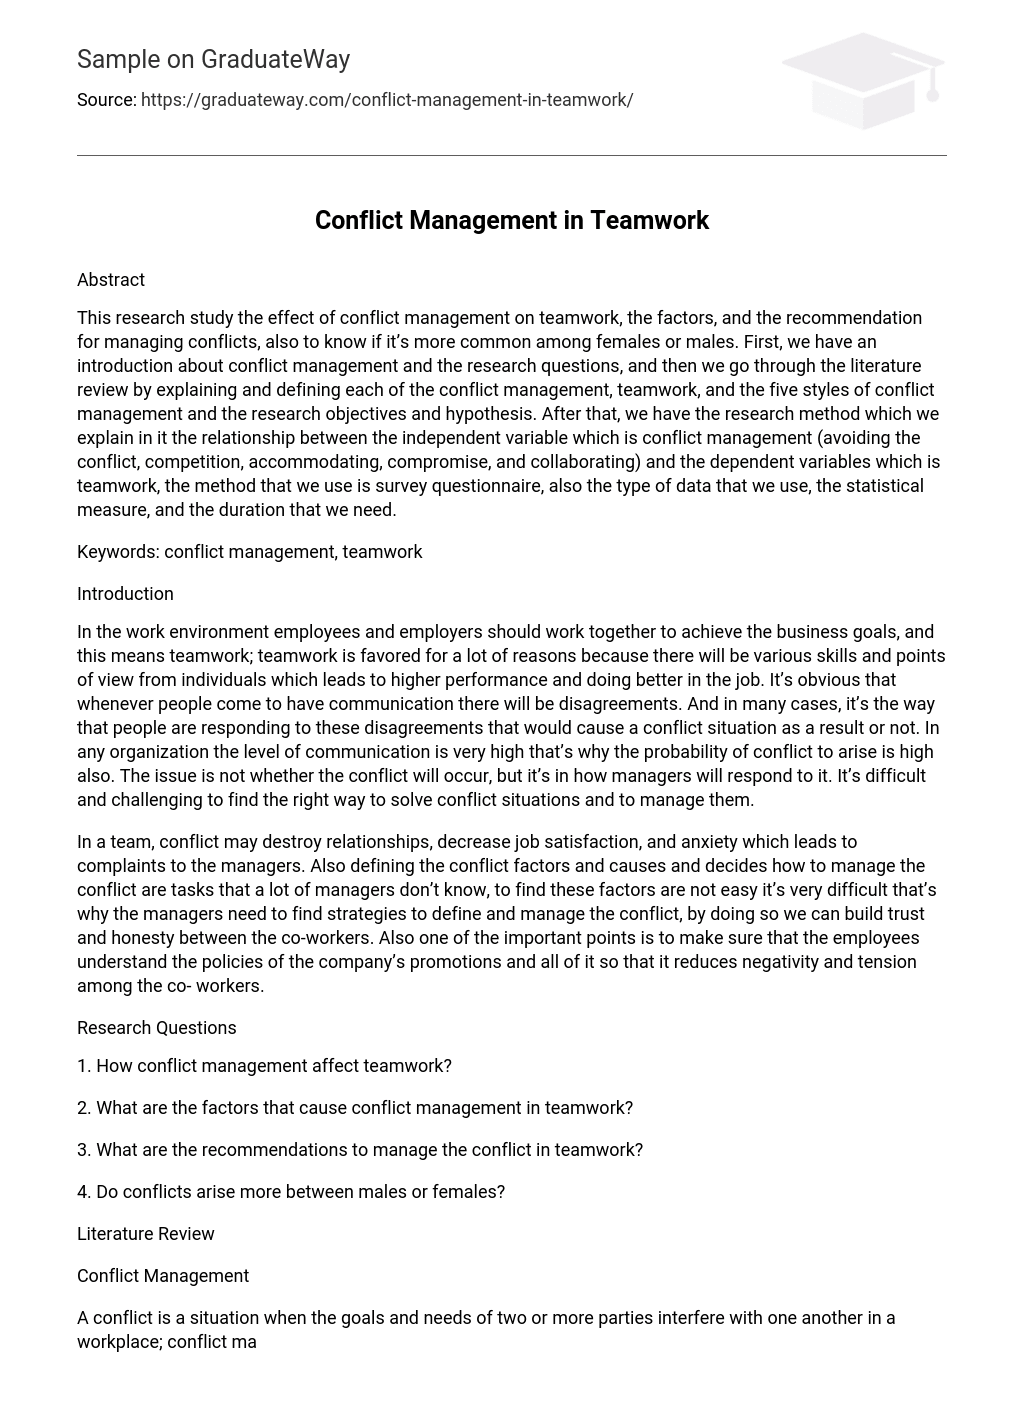 Conflict Management in Teamwork